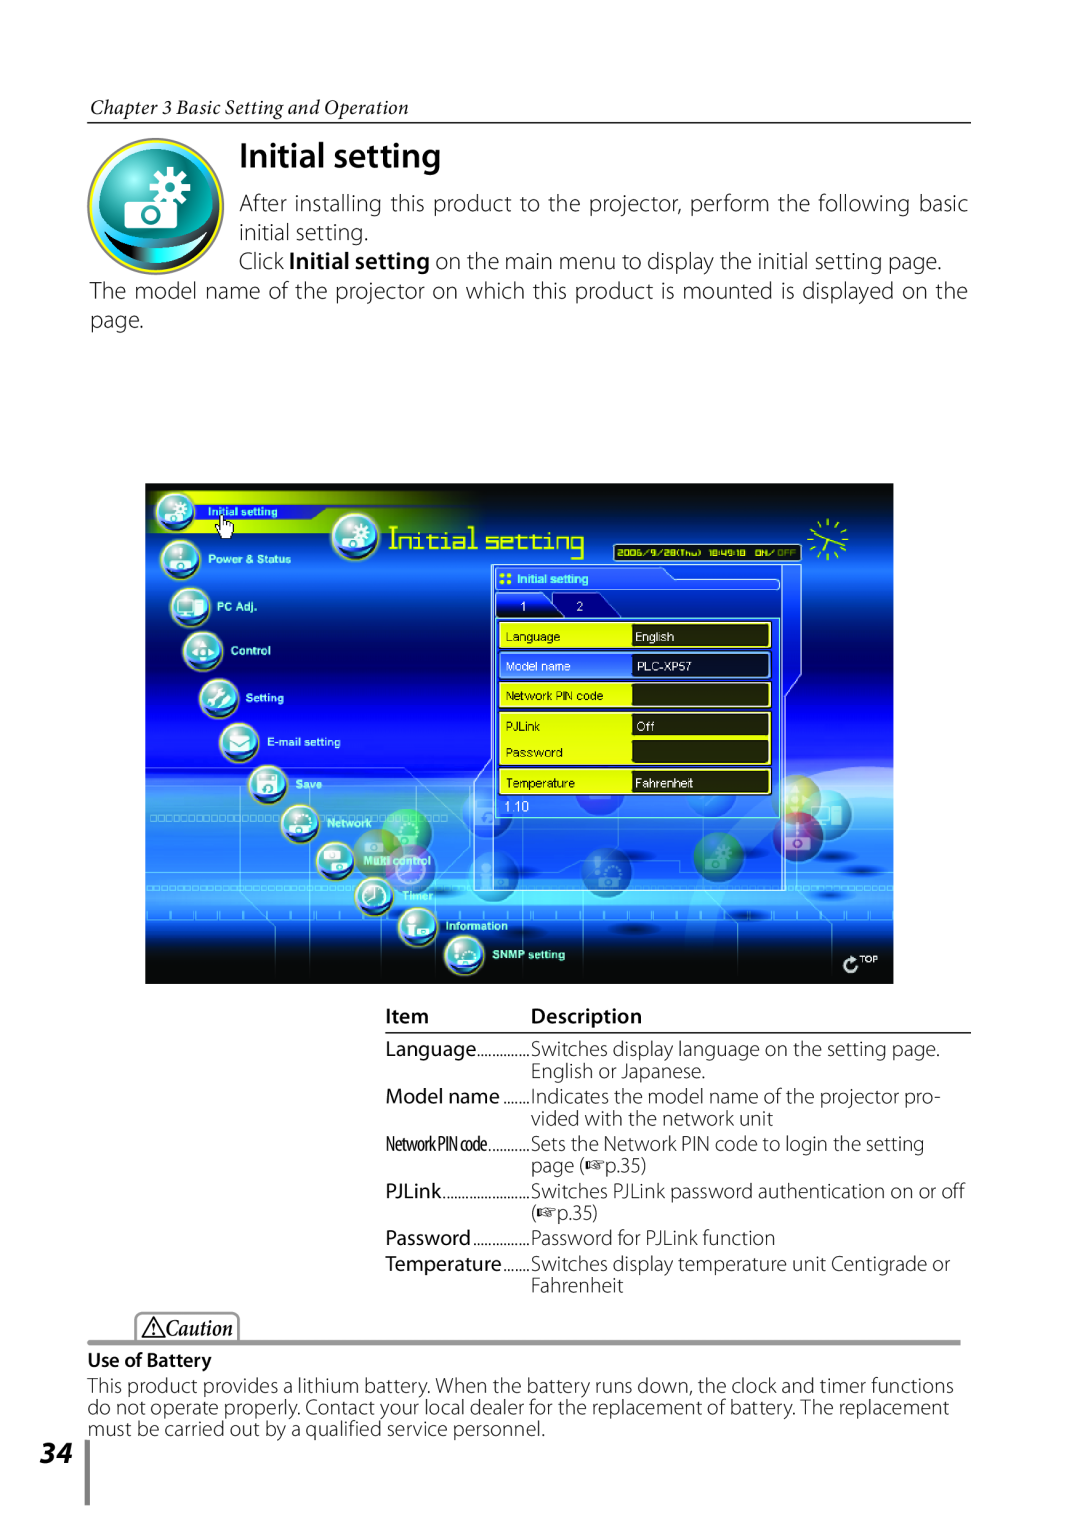 Sanyo POA-PN03C owner manual Initial setting, Item, Description, Use of Battery 